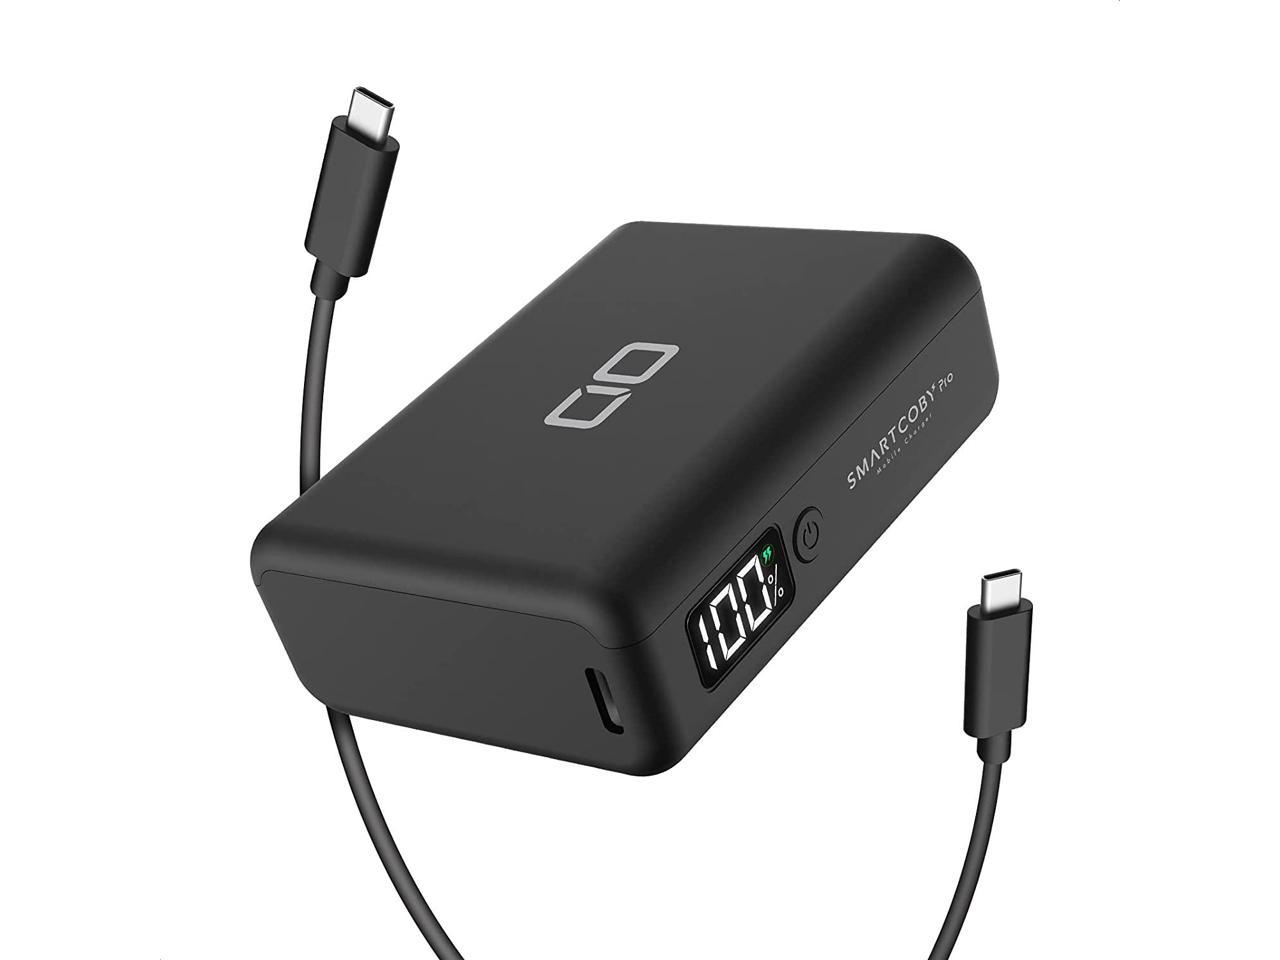 CIO Compact Power Bank, 30W Power Bank Fast Charging, 10000mAh USB 